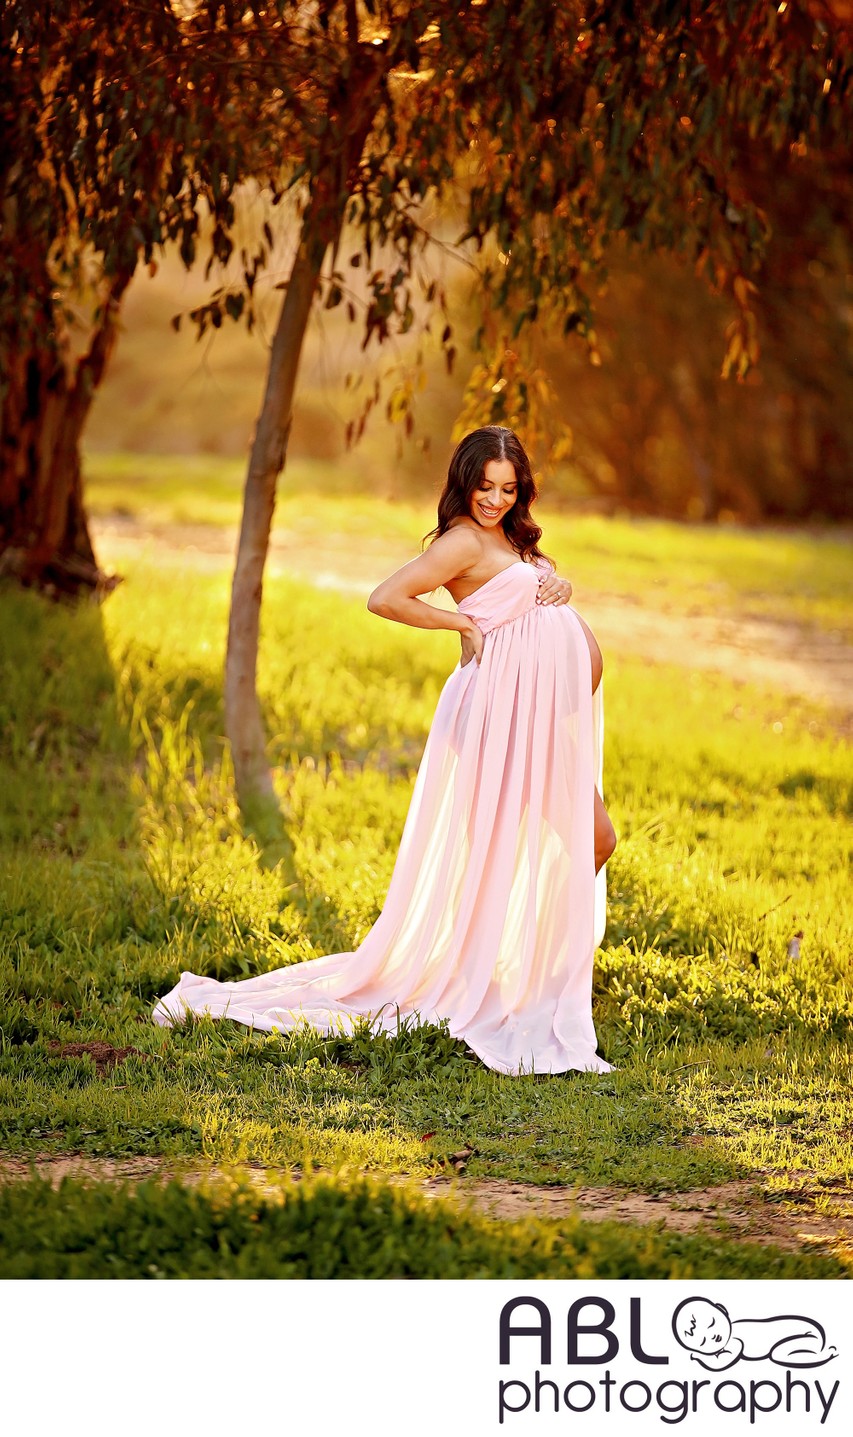 San Diego maternity photos with dramatic lighting